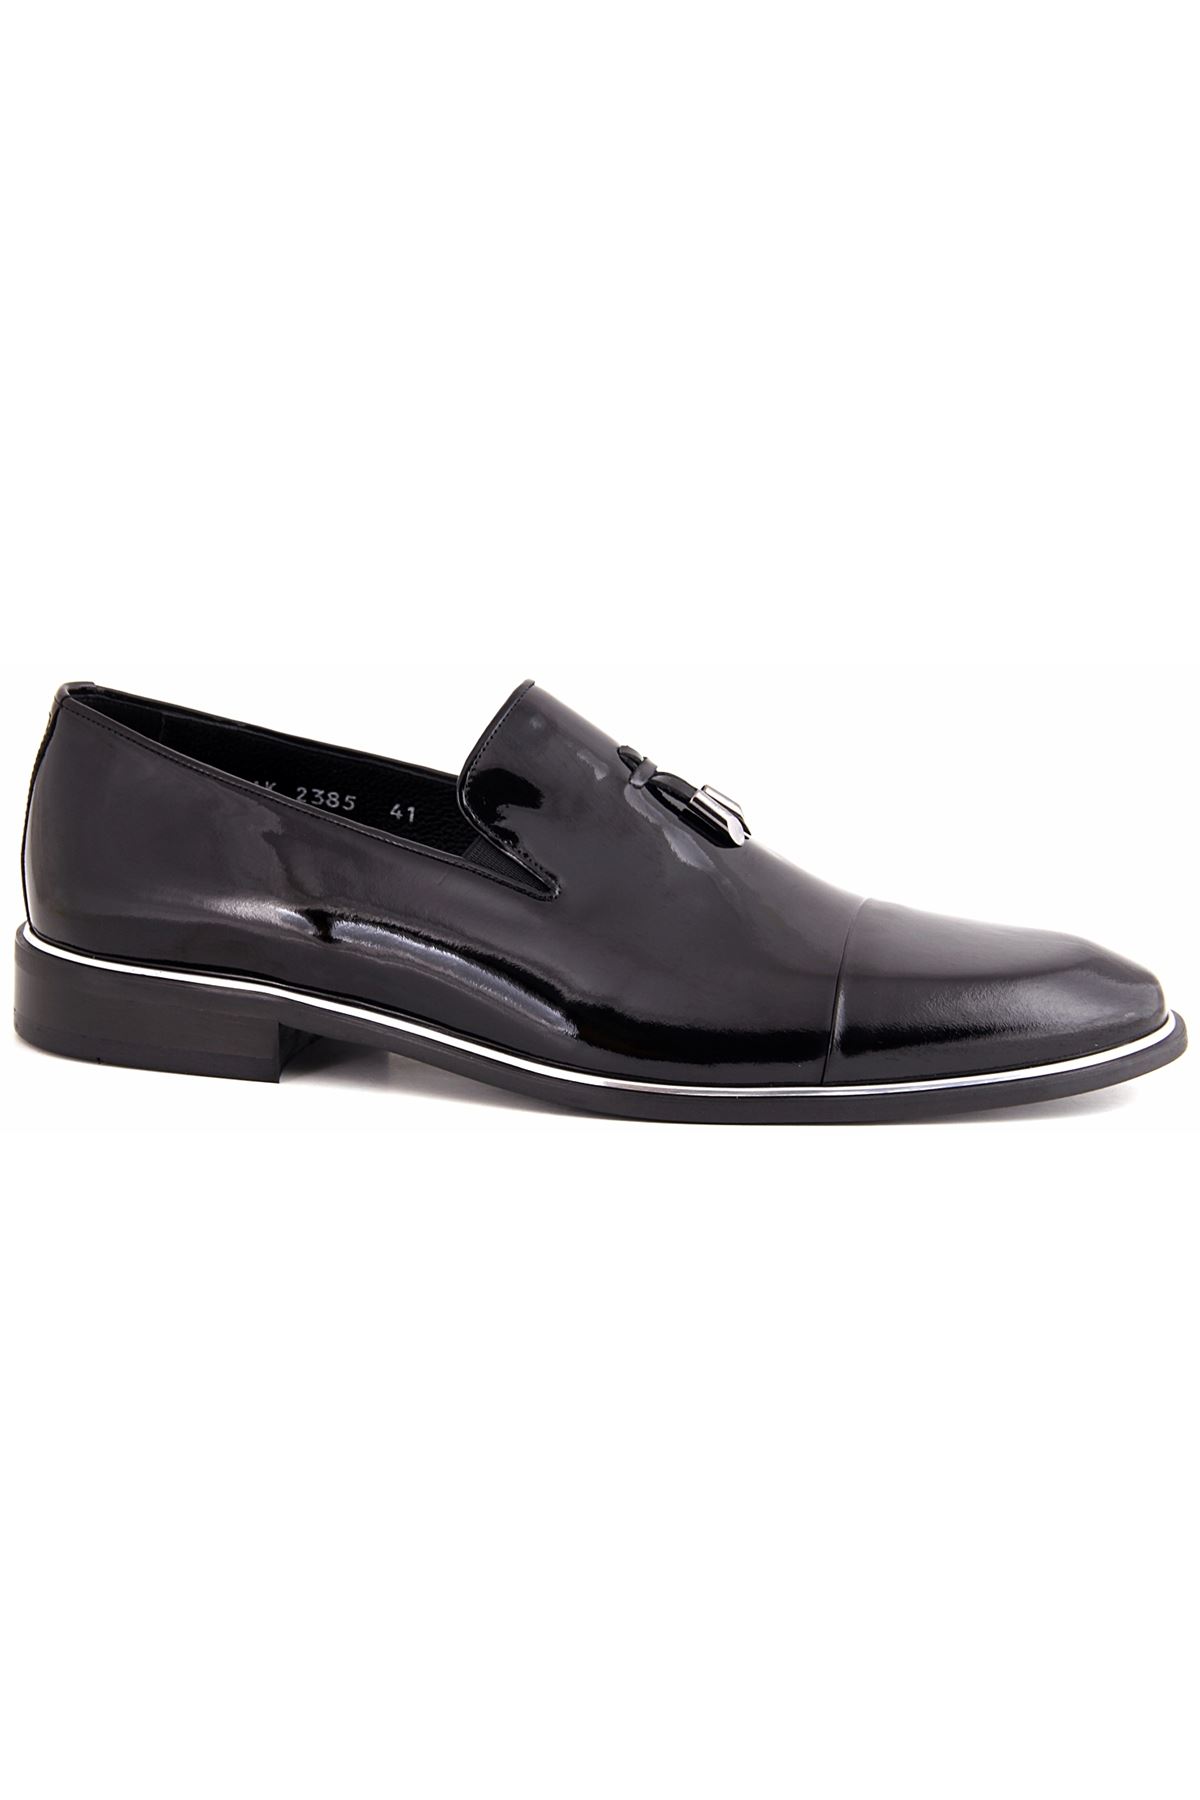 Libero 2385 Klasik Erkek Ayakkabı - Siyah Rugan